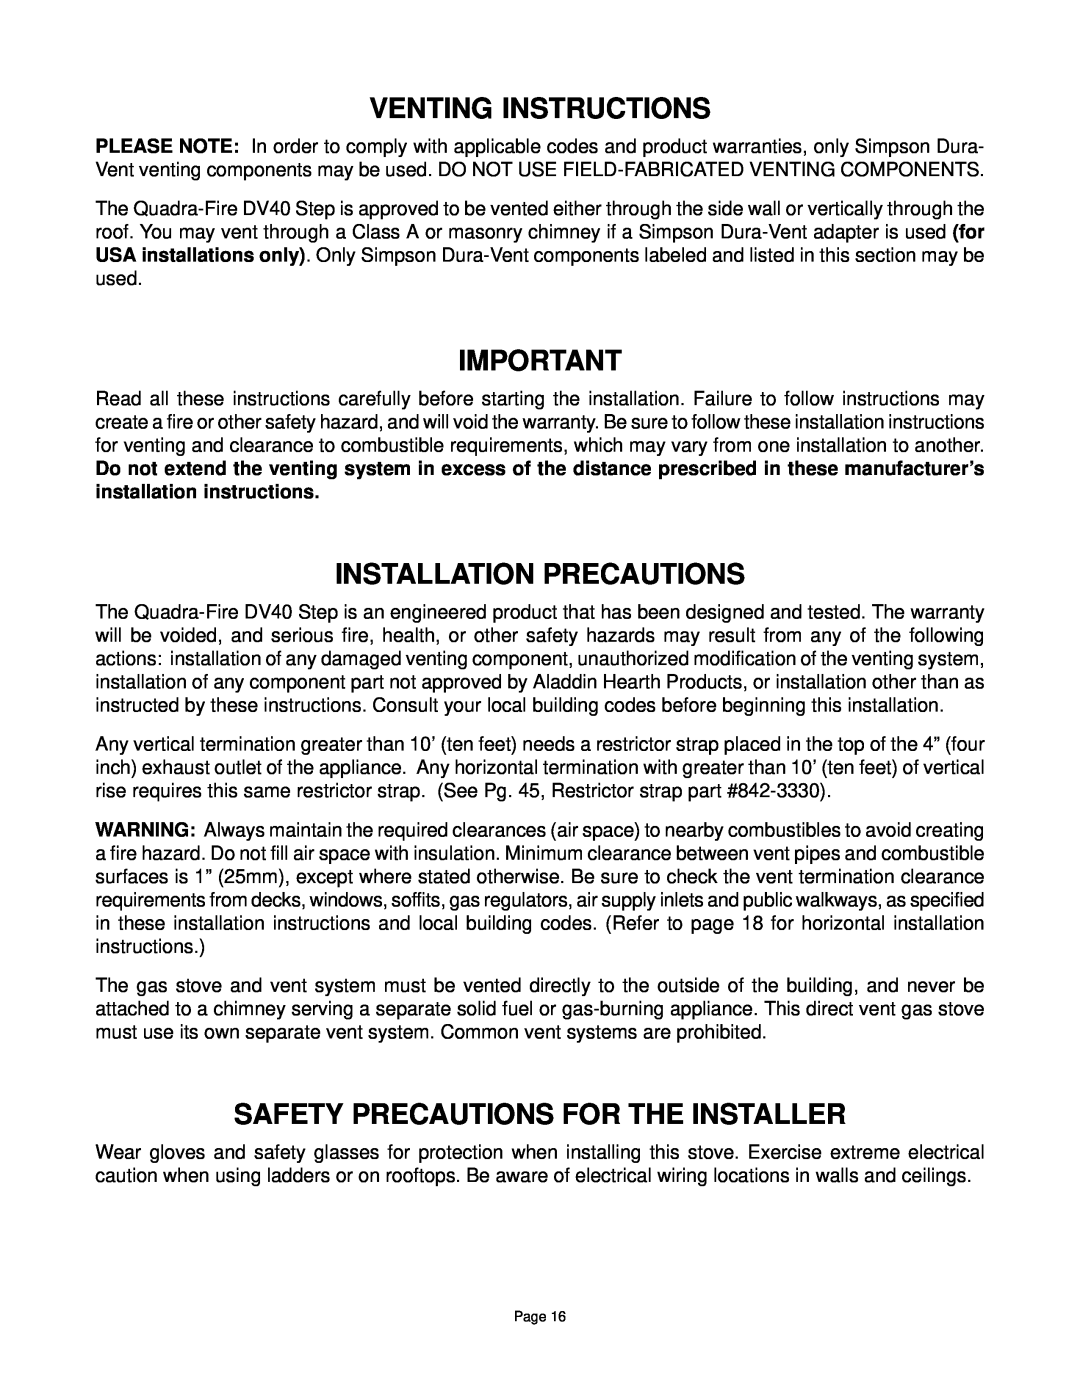 Quadra-Fire DV-40 manual Venting Instructions, Installation Precautions, Safety Precautions For The Installer 